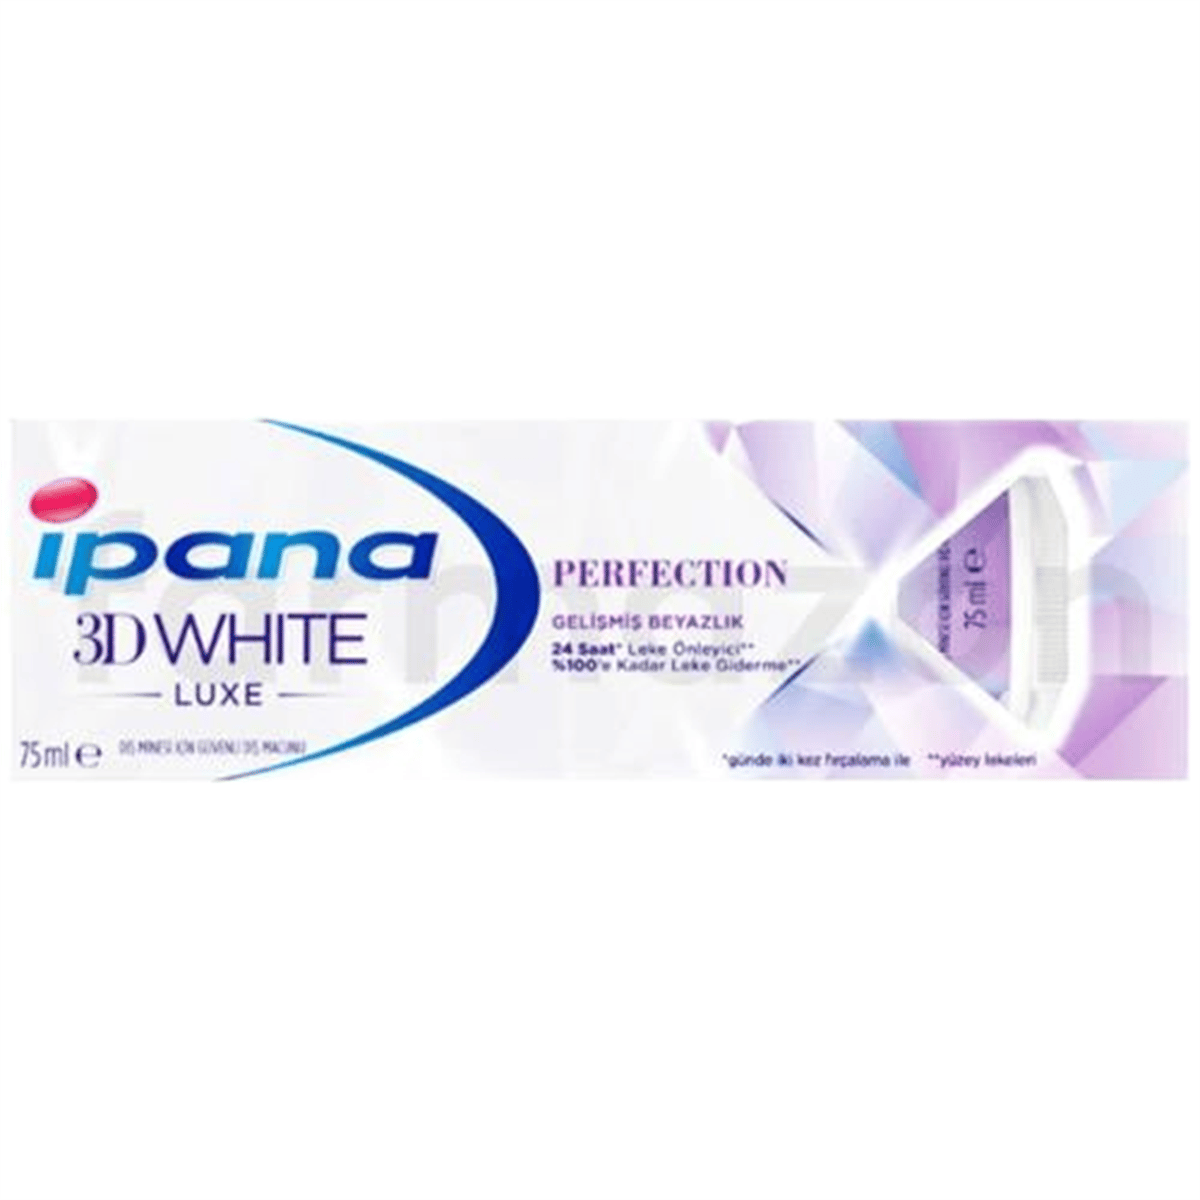 İpana Diş Macunu 3D White Luxe Perfection 75 ml 154,21